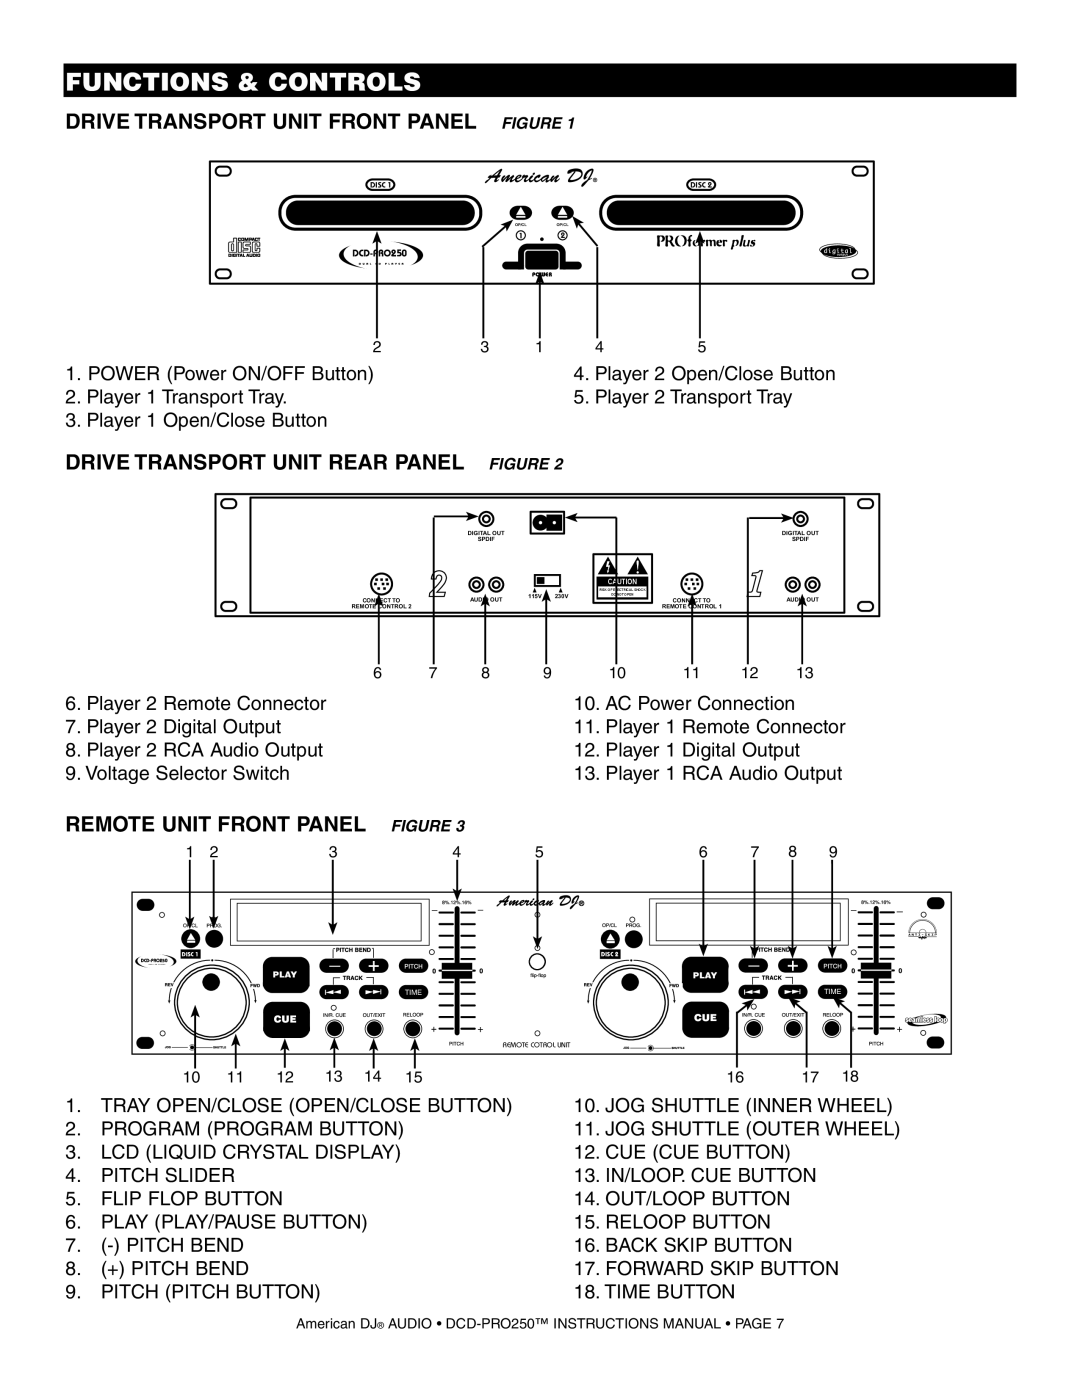 American Audio DCD PRO 250 manual Functions & Controls, Drive Transport Unit Rear Panel, Drive Transport Unit Front Panel 